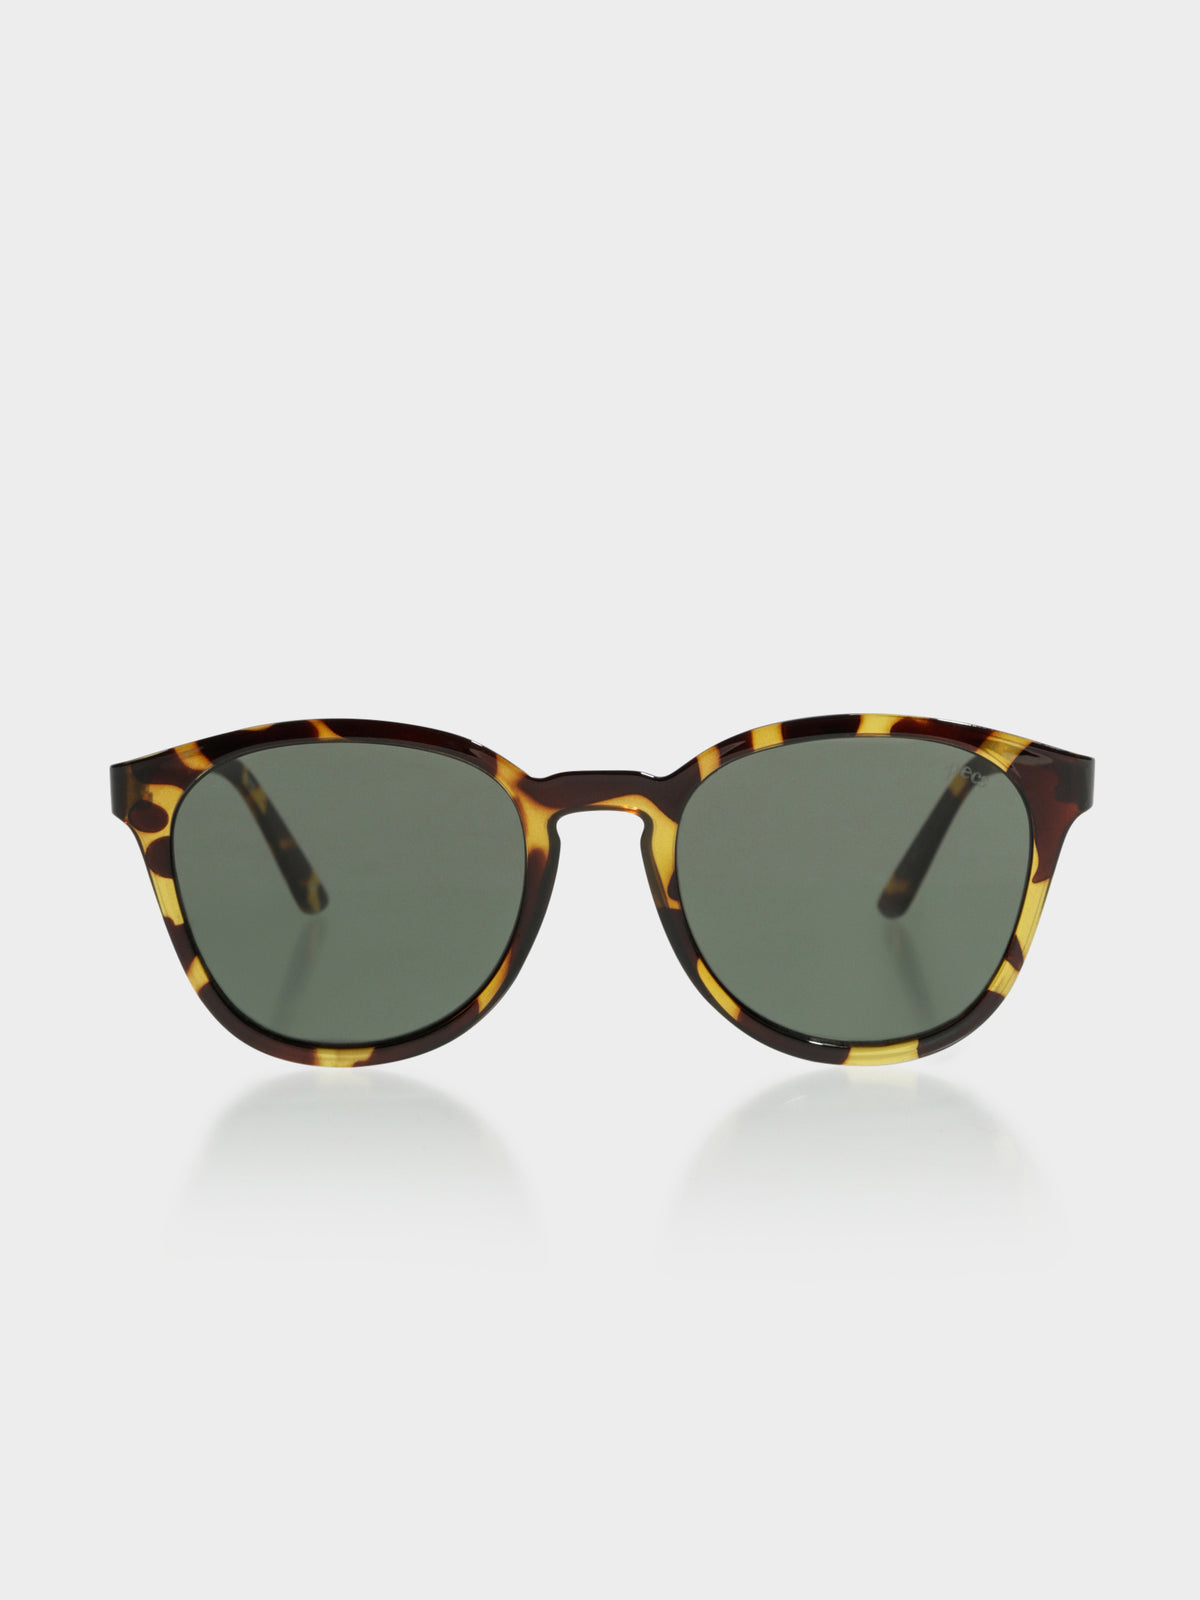 Renegade Sunglasses in Syrup Tortoiseshell